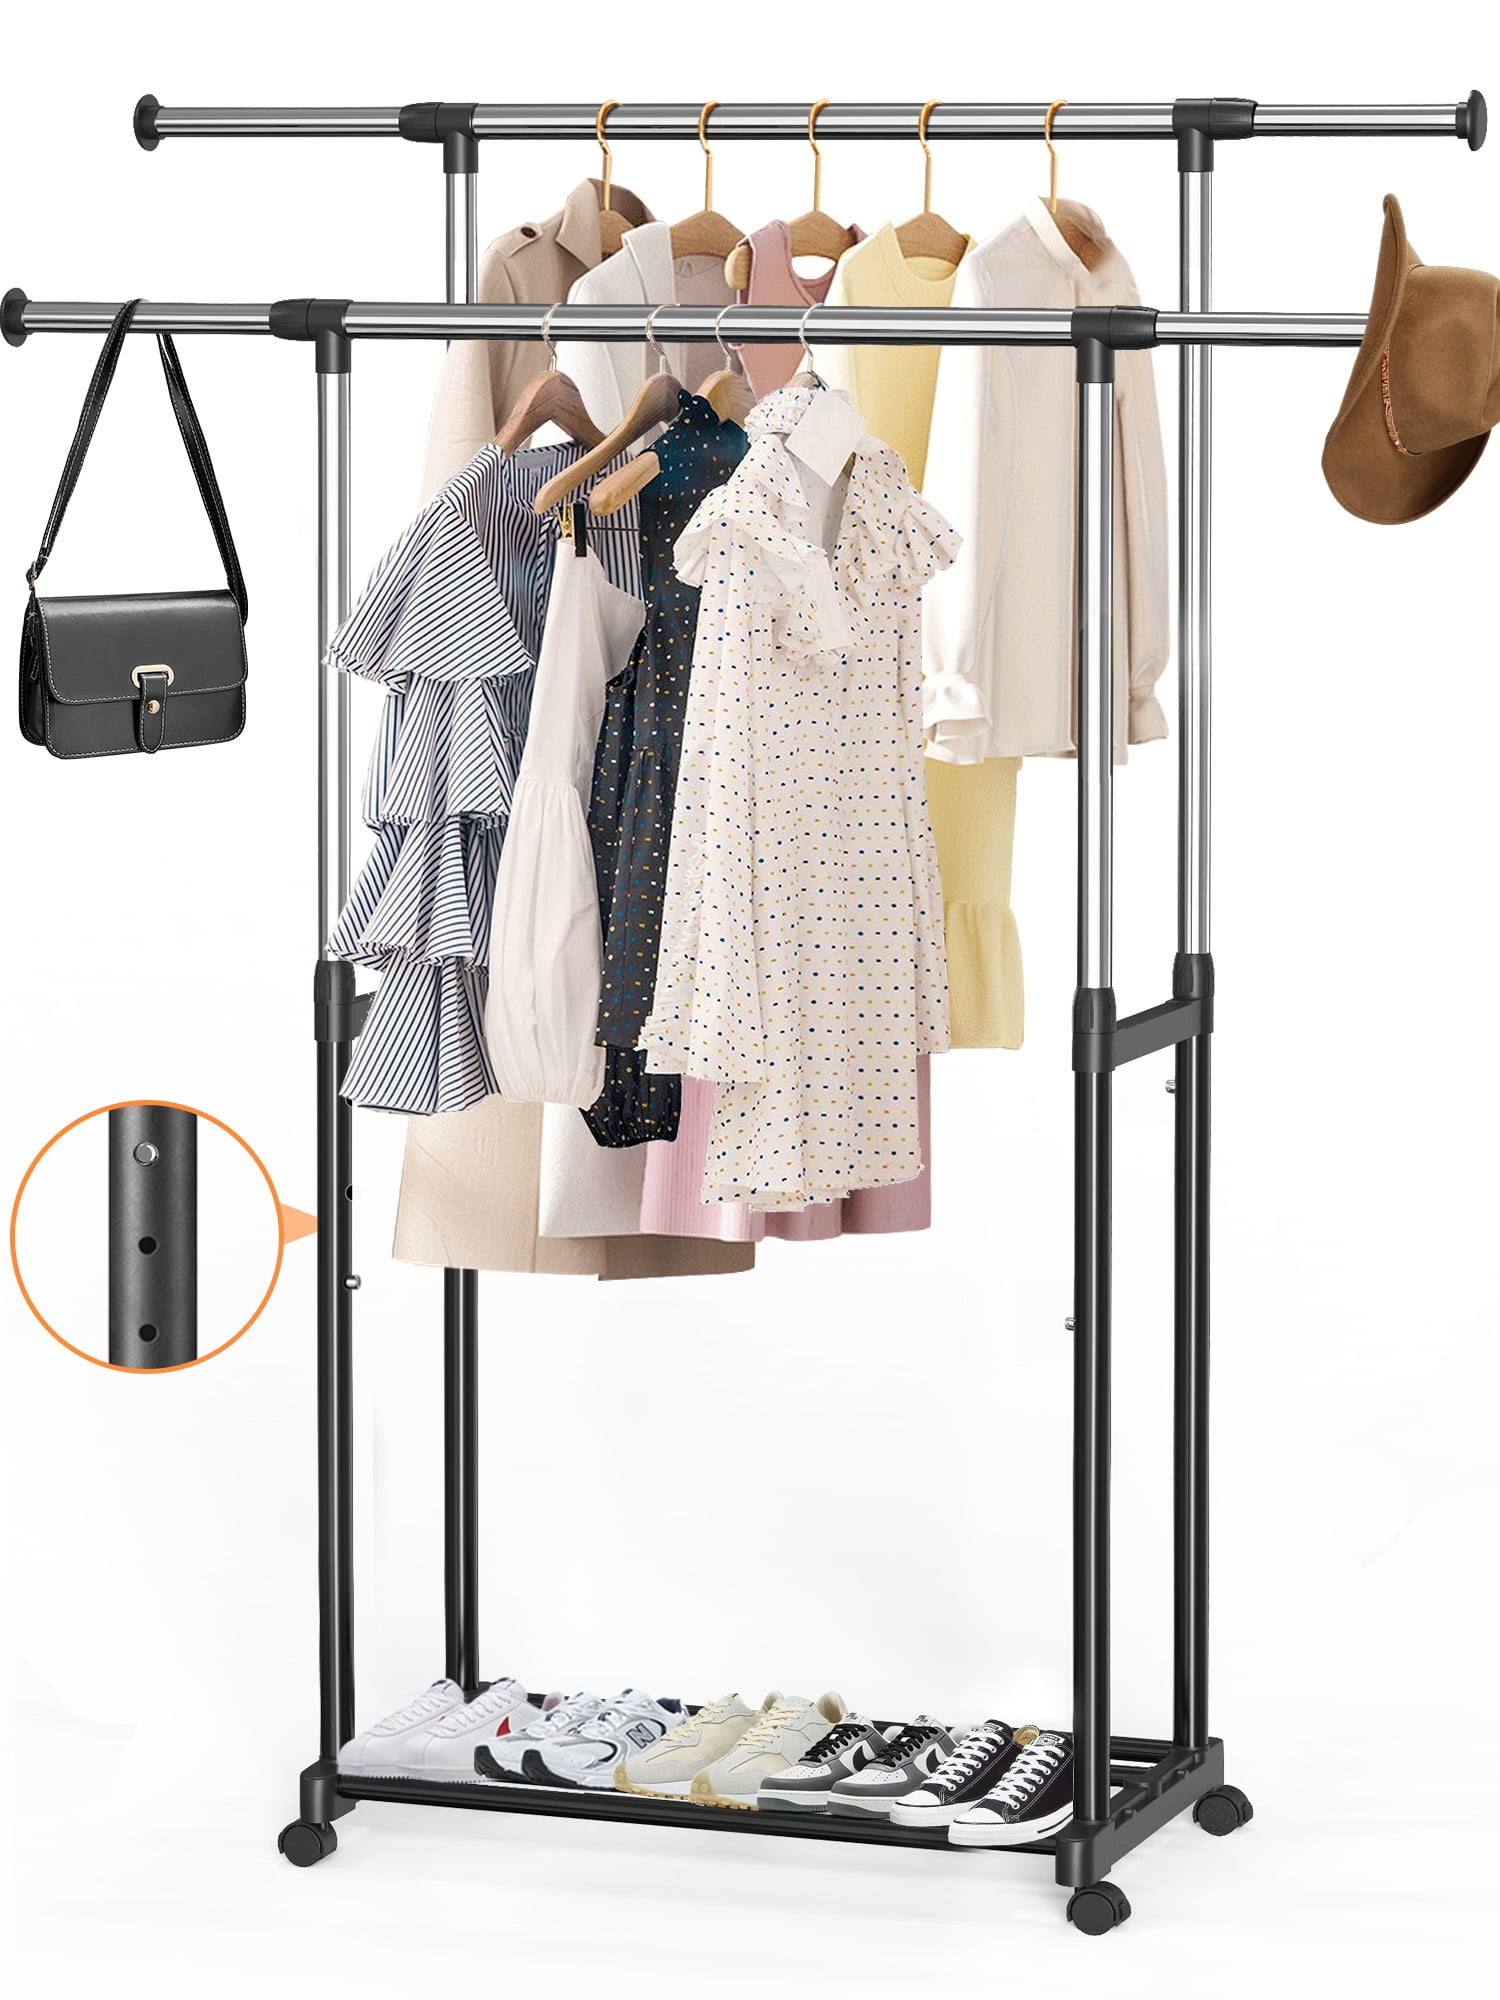 Nefoso Double Rails Clothing Garment Rack,Portable Adjustable Clothes ...